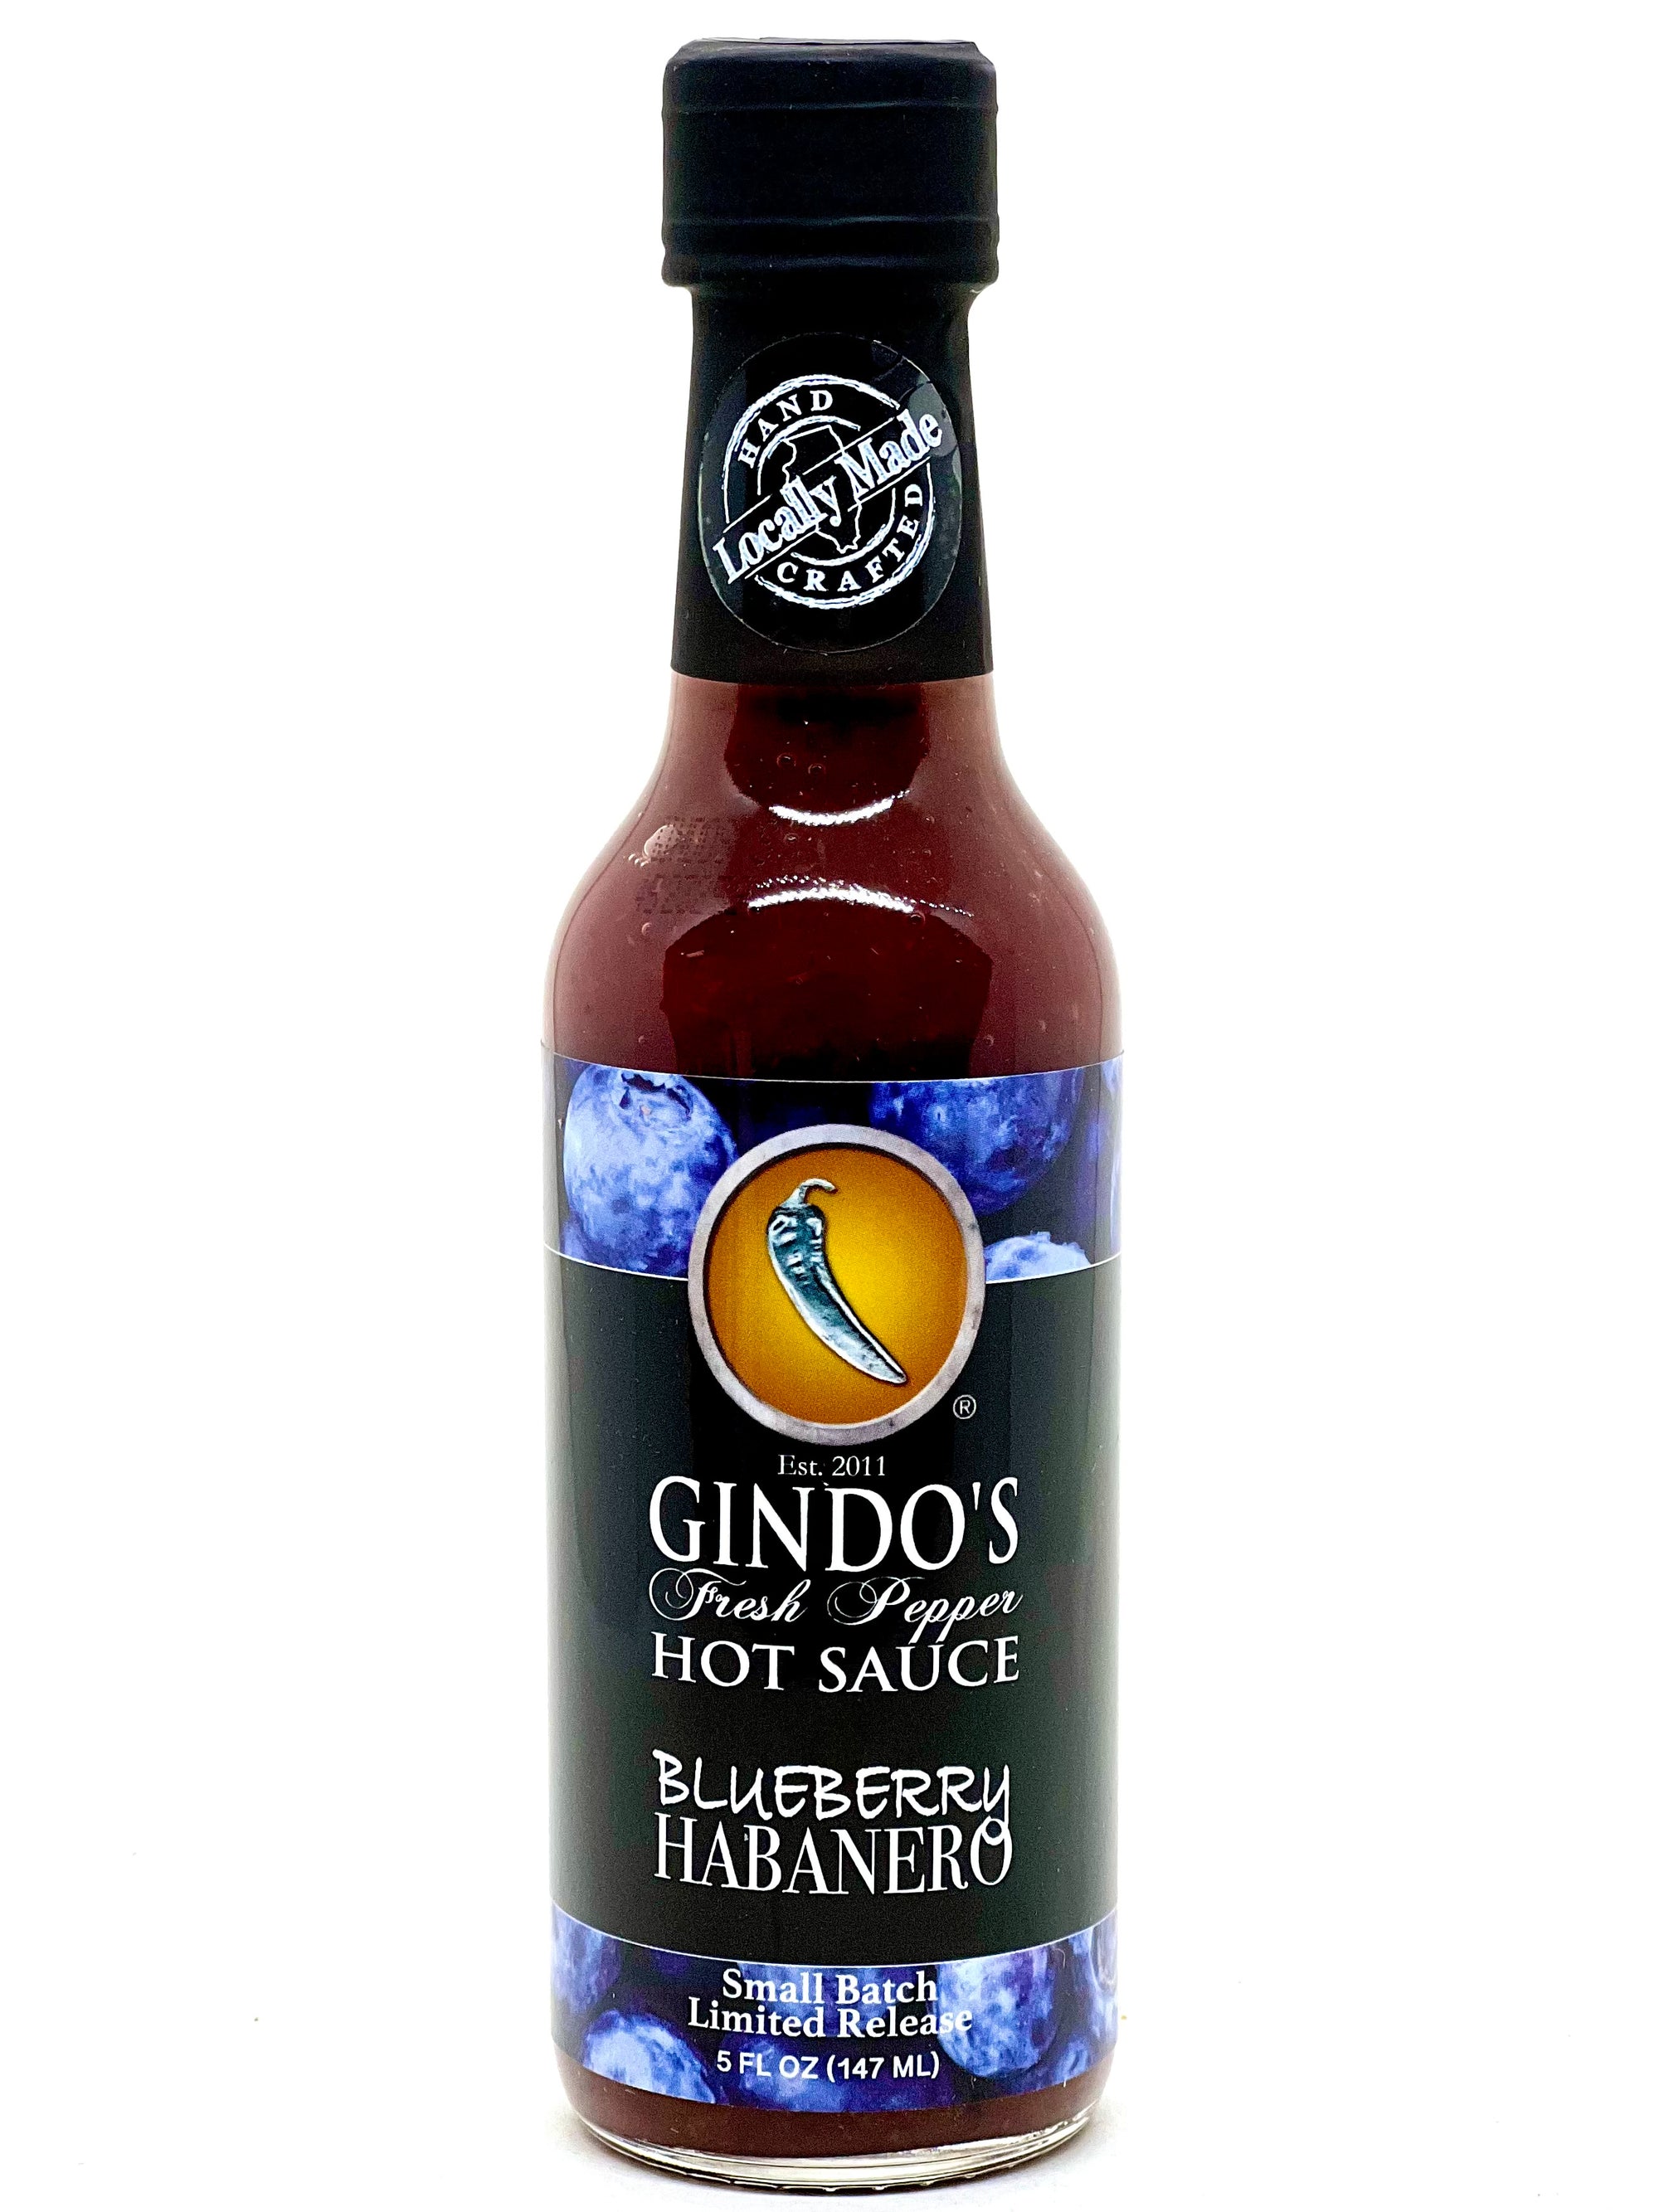 Gindo's Blueberry Habanero Spicy Fruit Hot Sauce